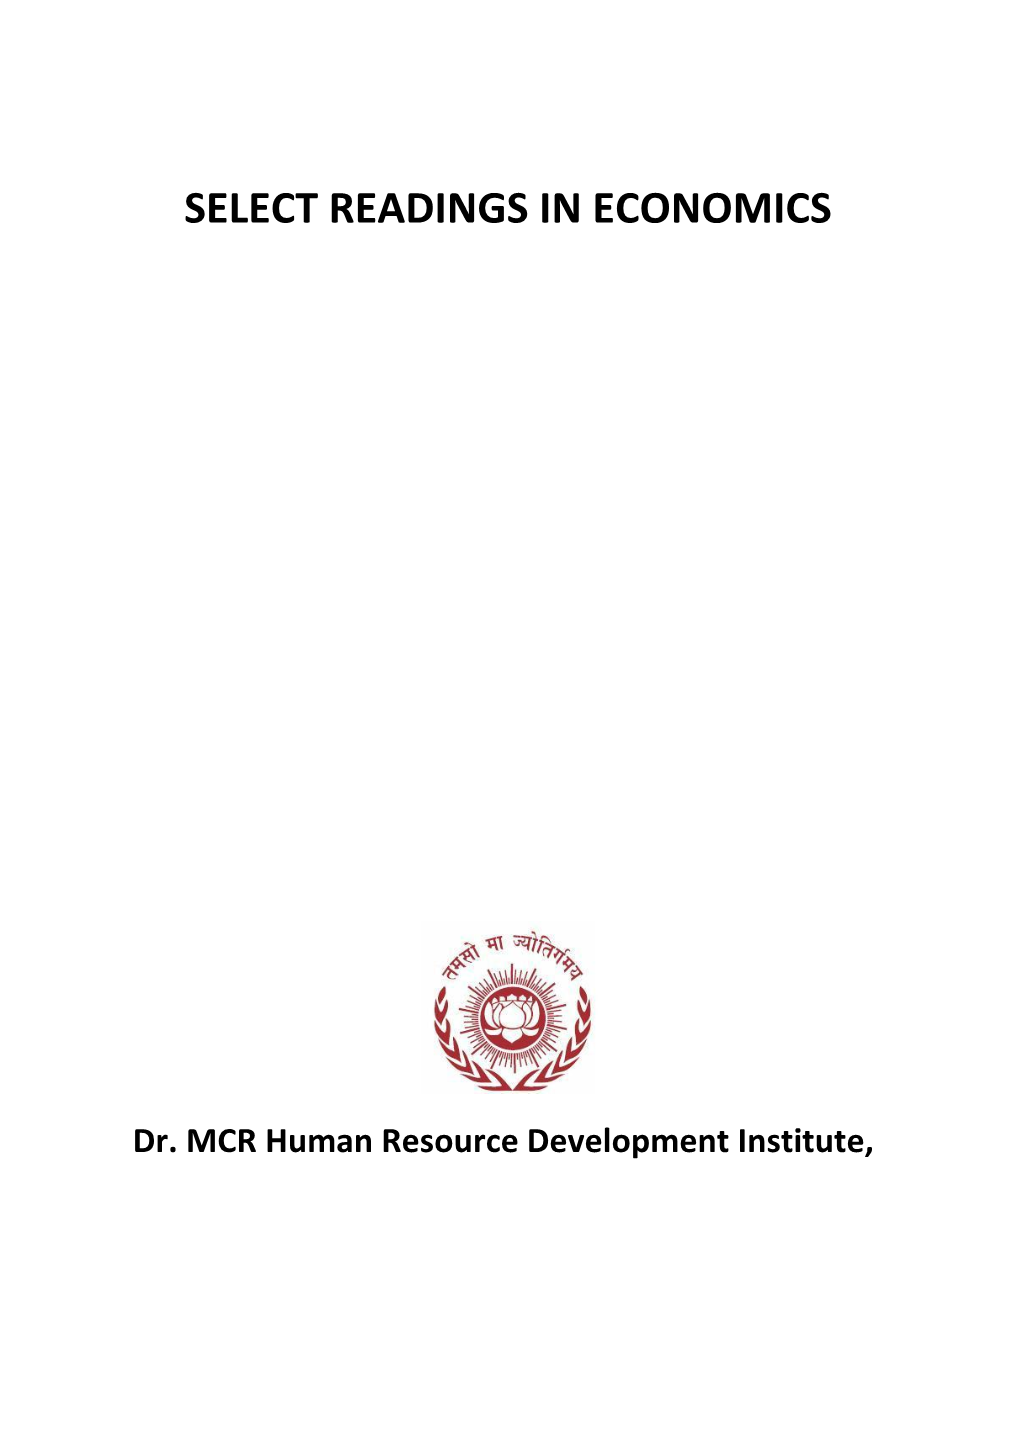 Select Readings in Economics